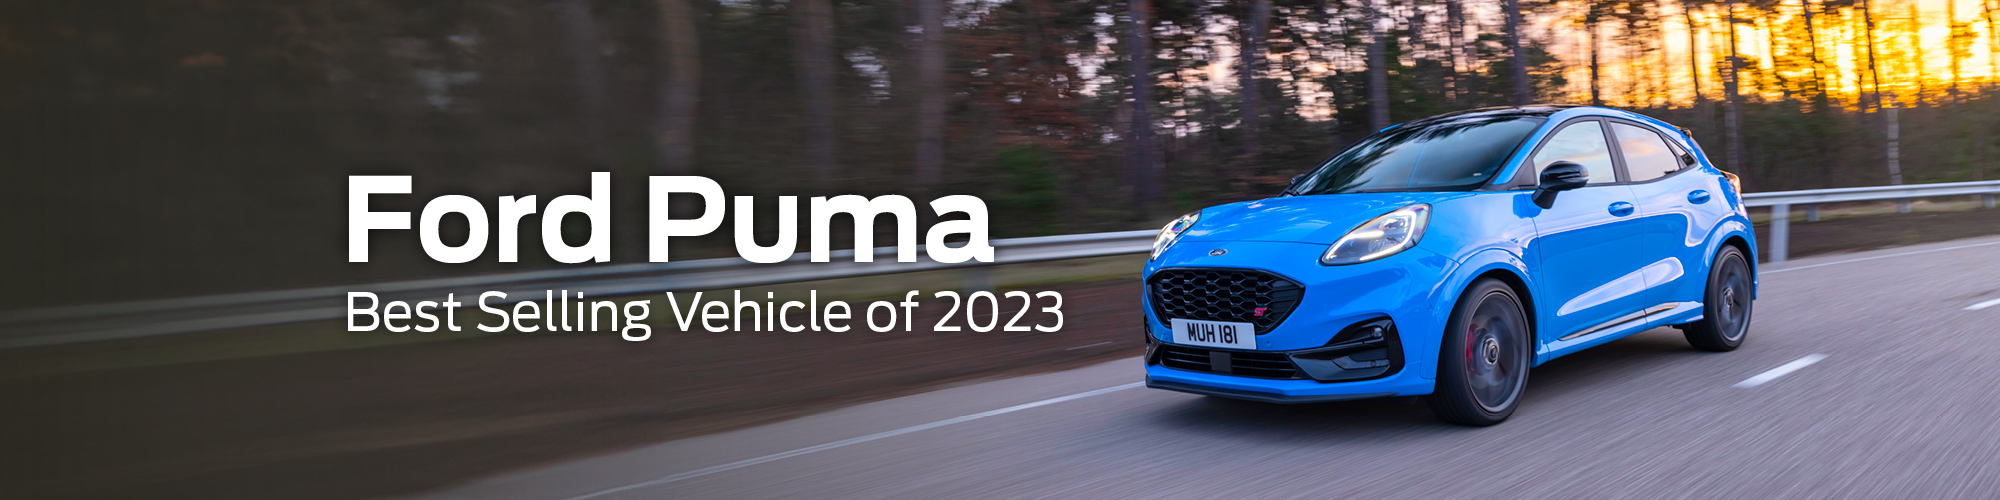 Puma Bestselling car of 2023 image